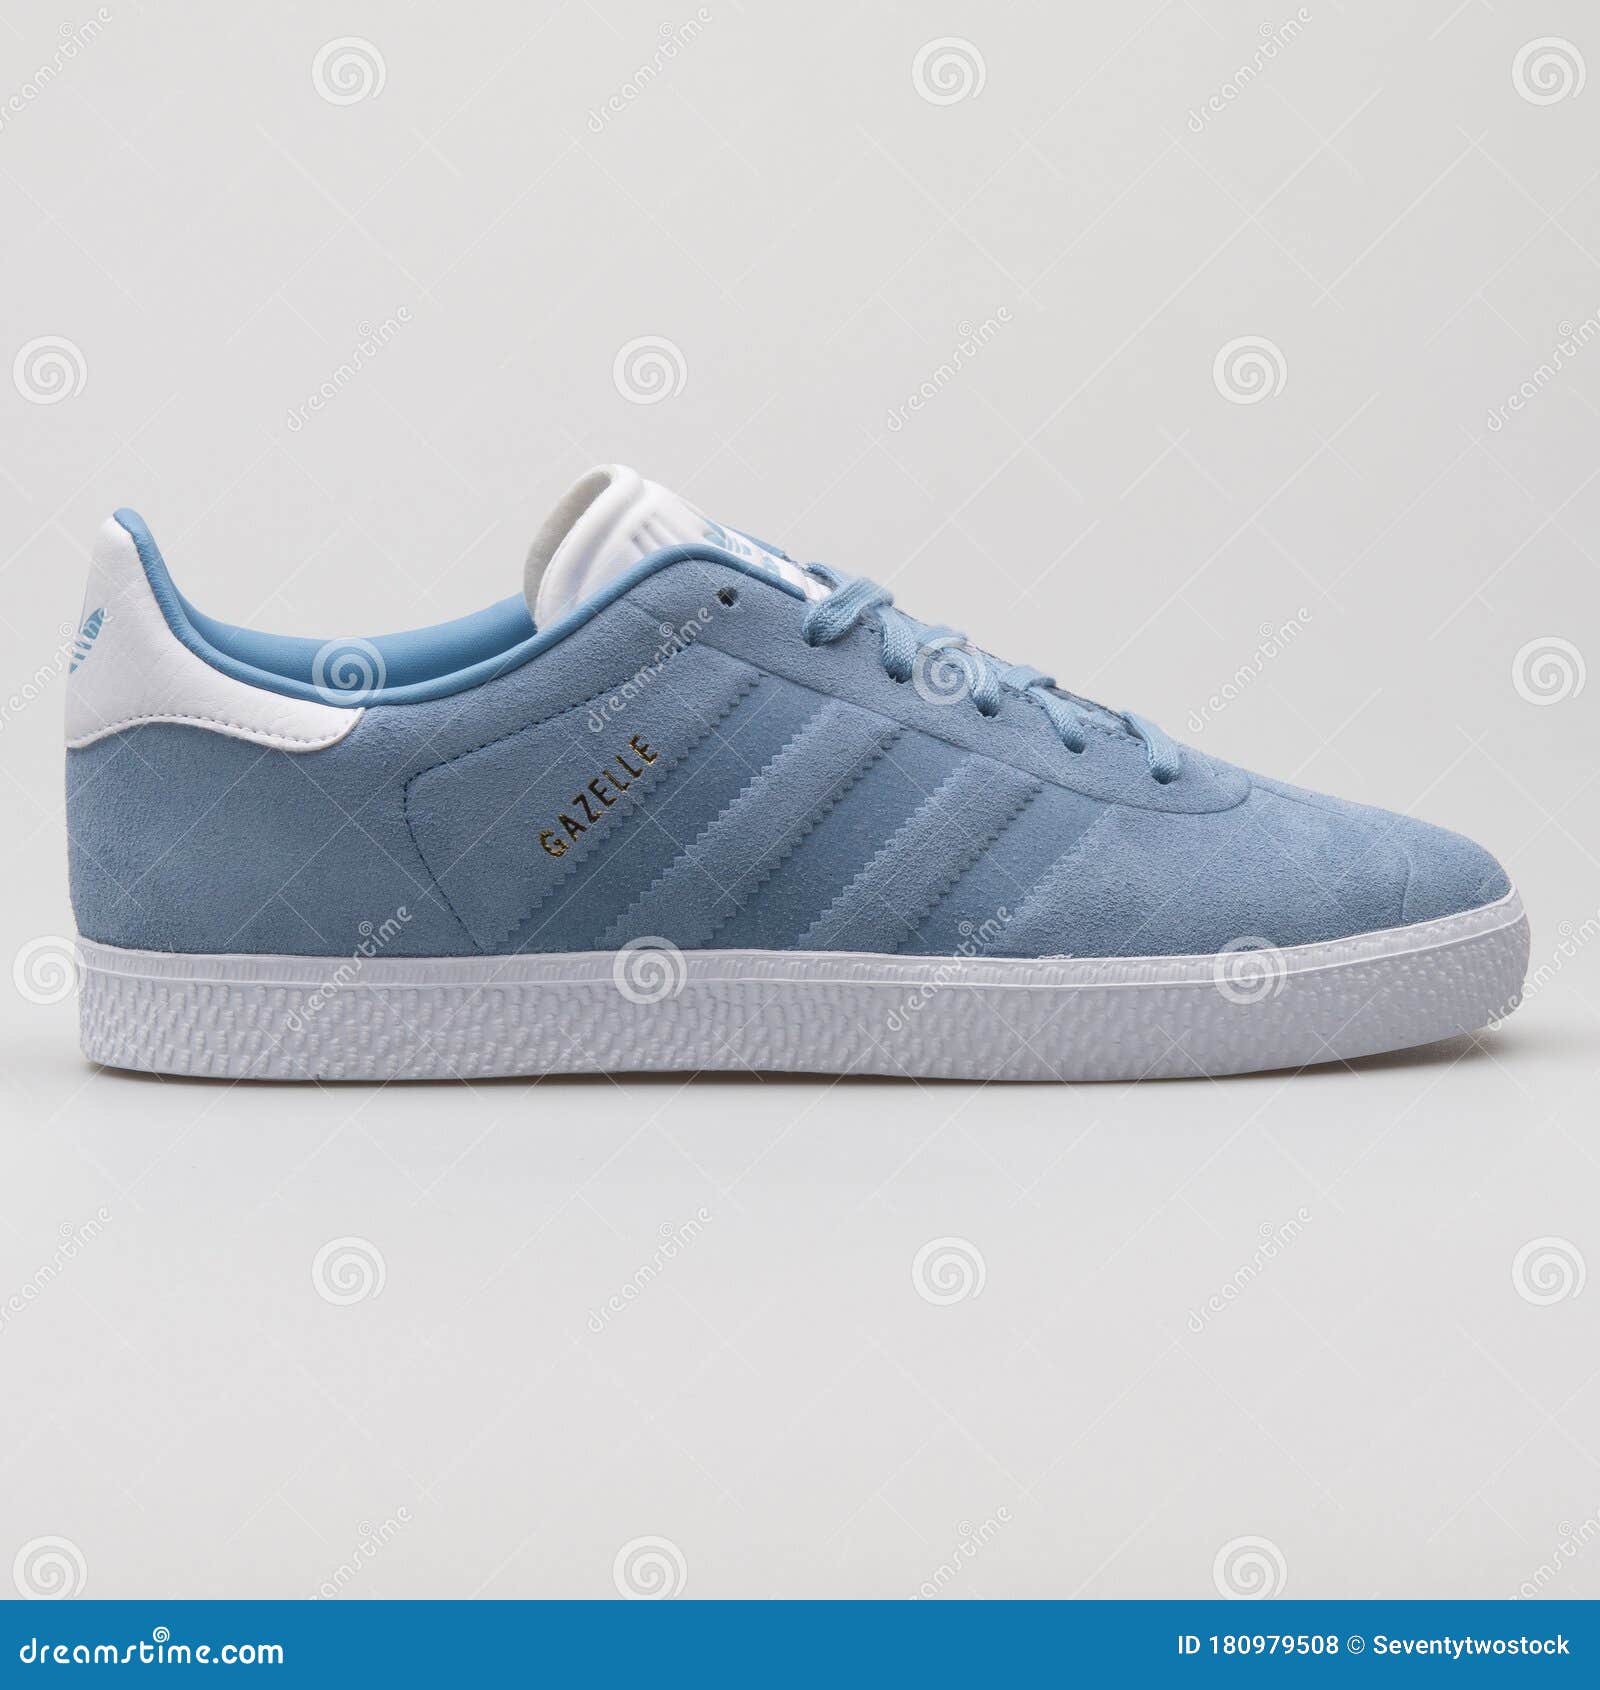 Adidas Gazelle Light Blue White Editorial Stock Photo - Image of sneakers, 180979508